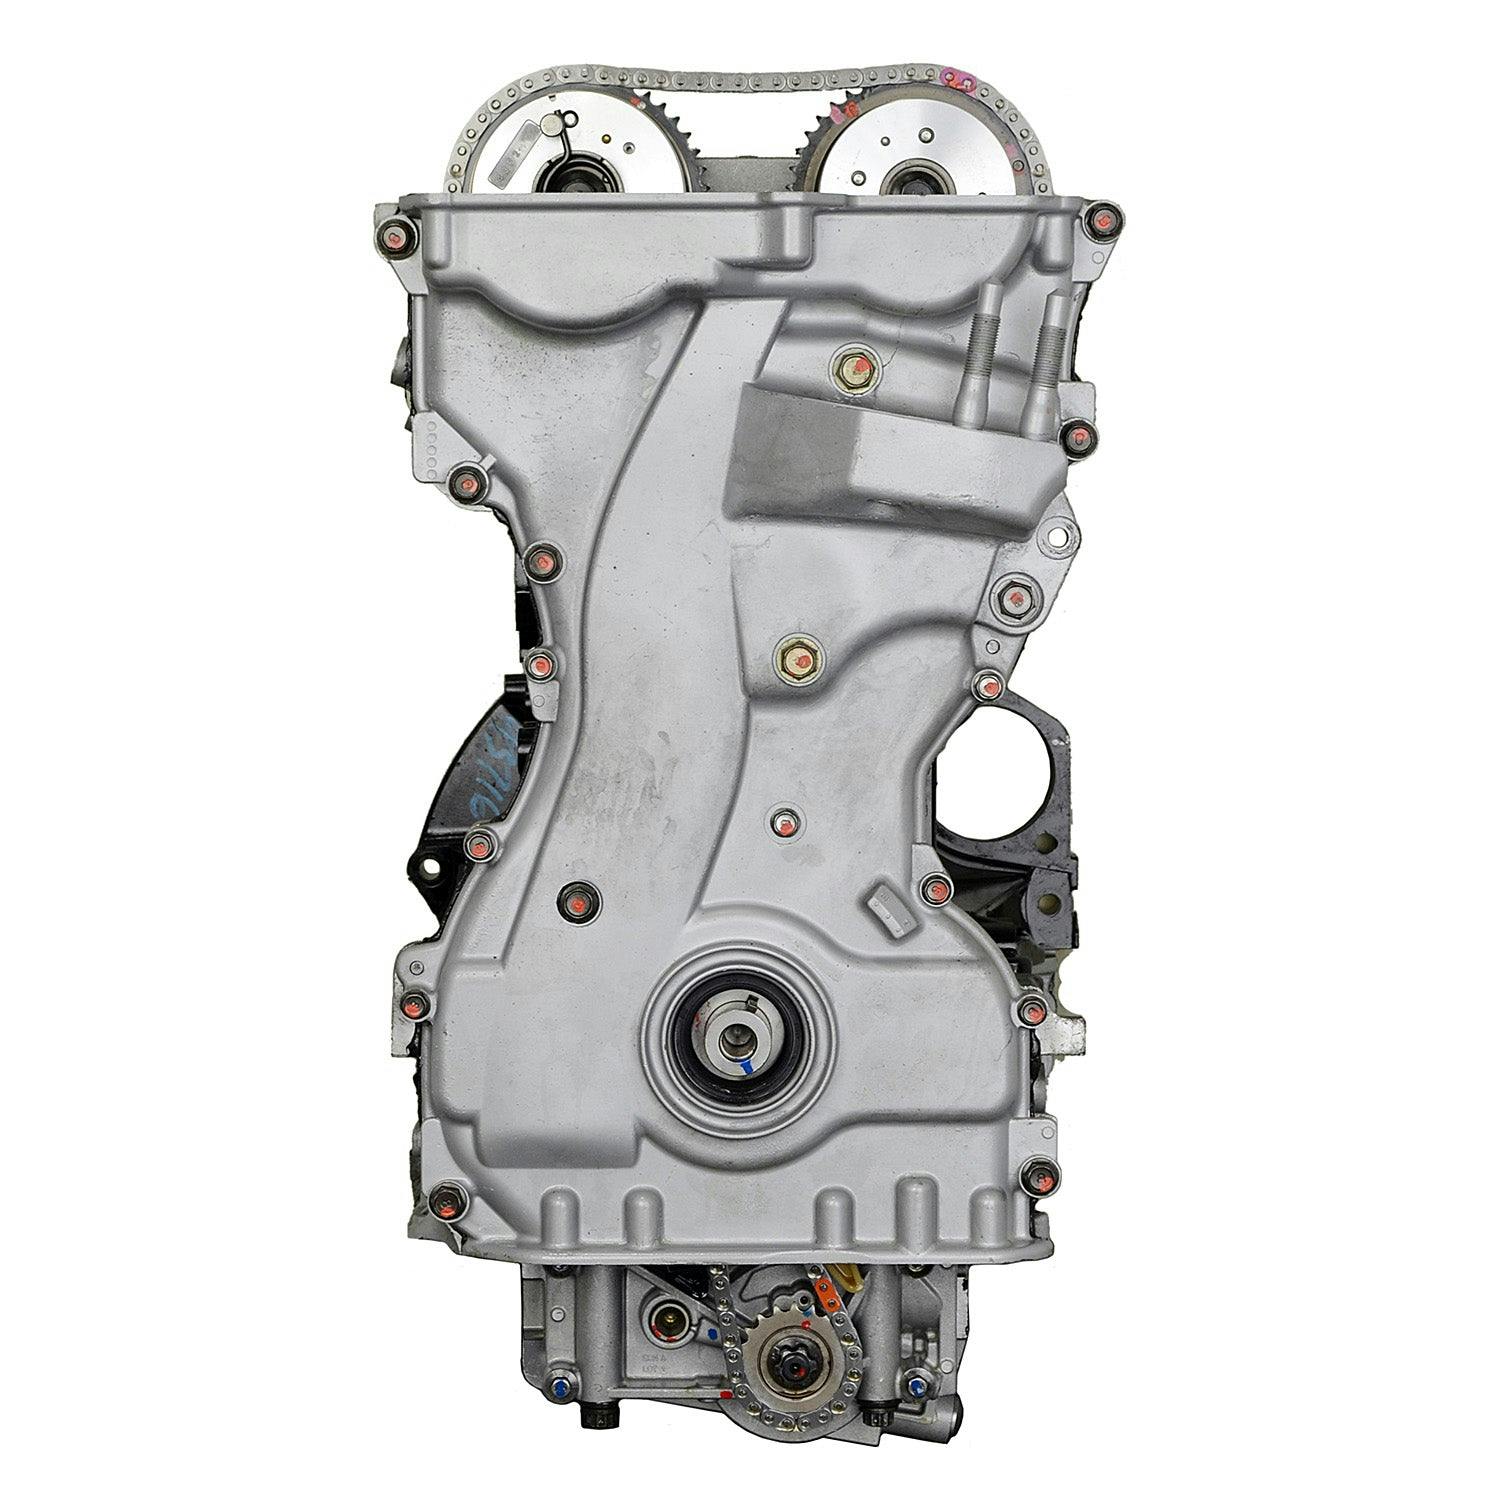 2.4L Inline-4 Engine for 2010-2011 Hyundai Sonata